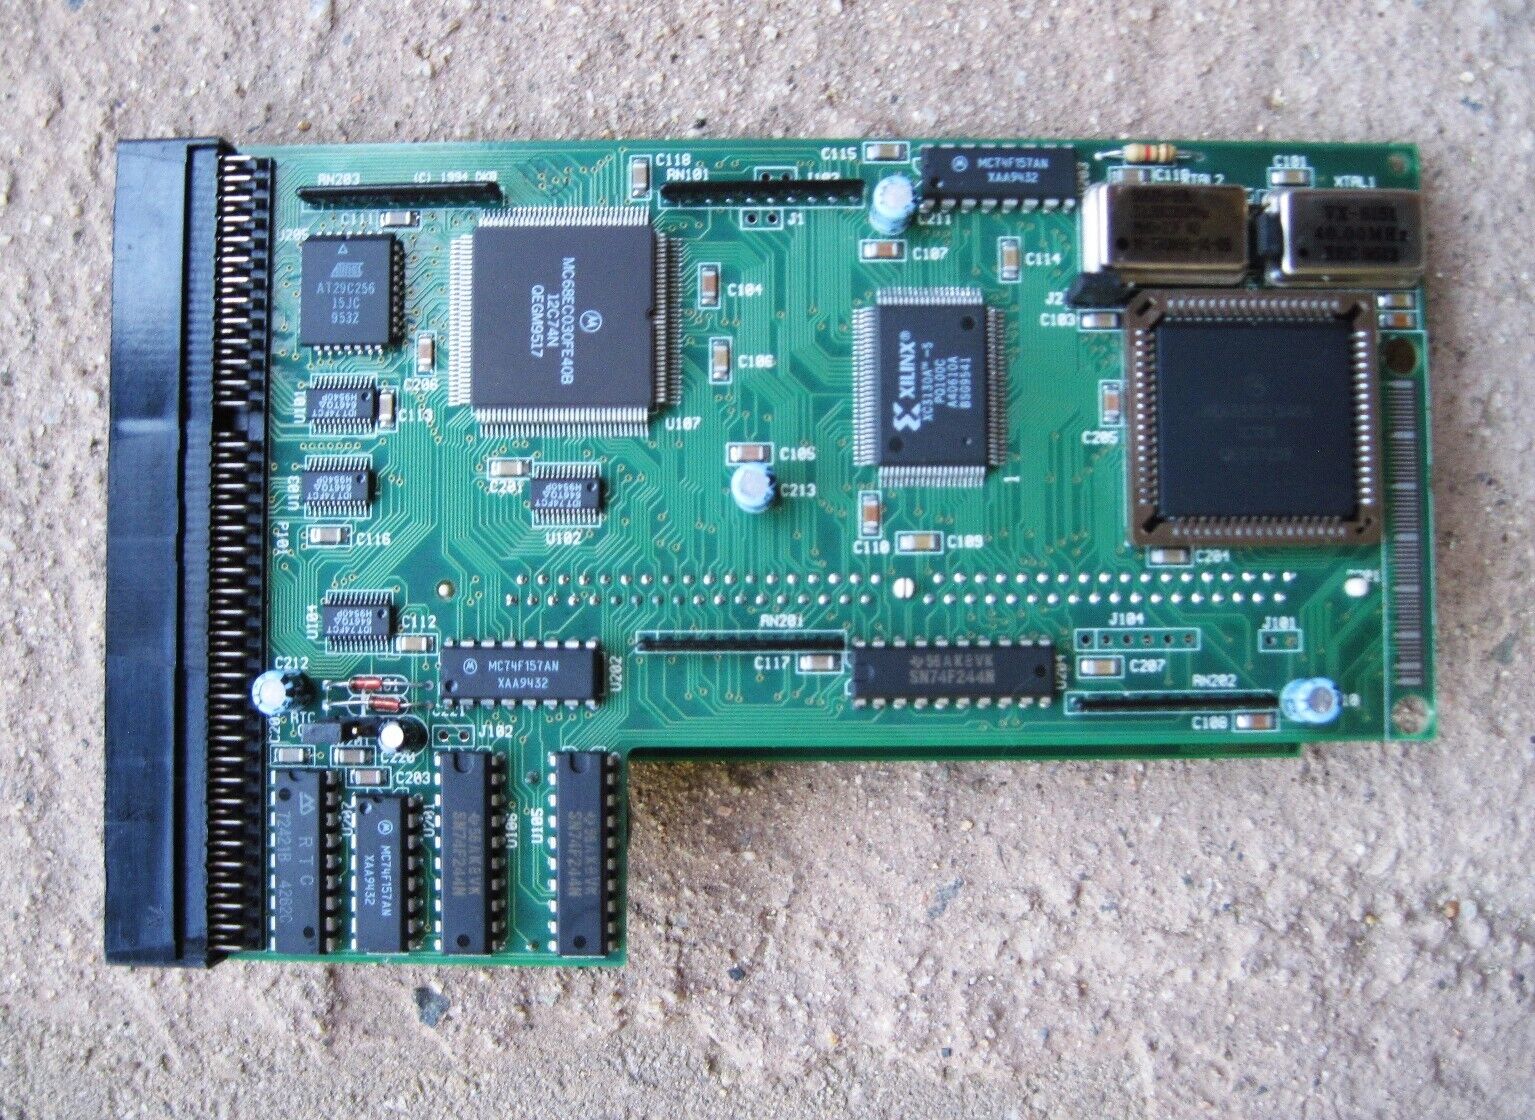 Amiga 1200 Accelerator DKB Cobra, 68030 at 40mhz, 4mb Fast Ram & FPU plus RTC